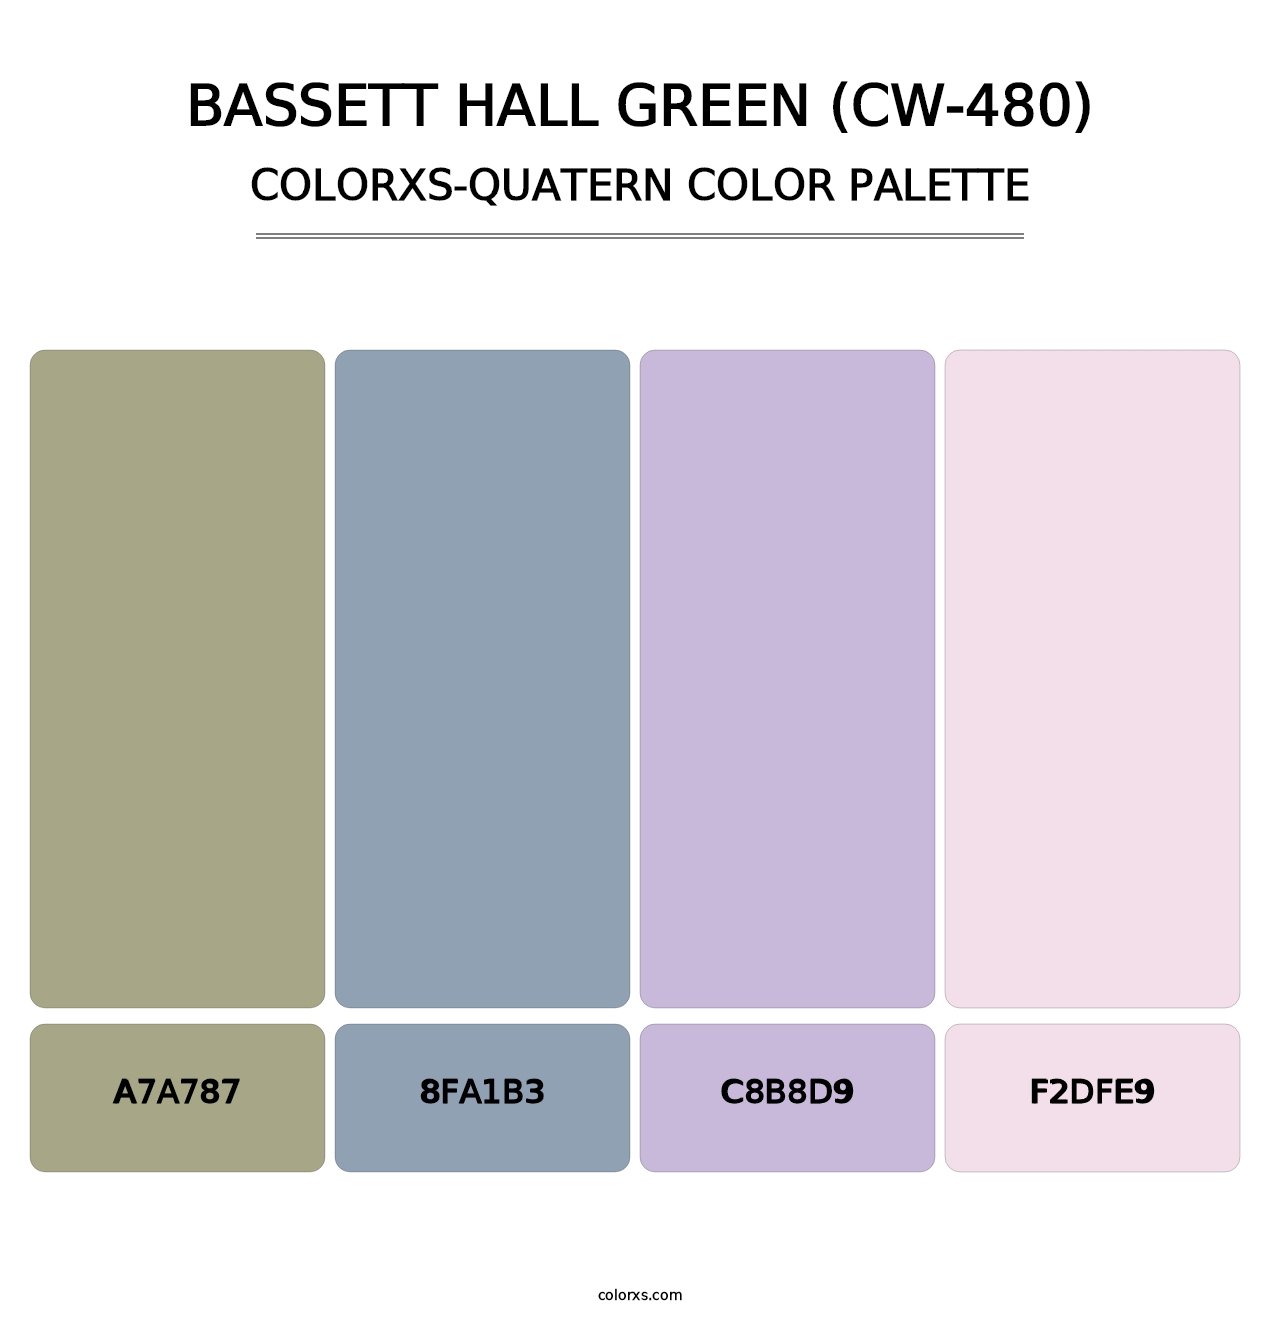 Bassett Hall Green (CW-480) - Colorxs Quatern Palette